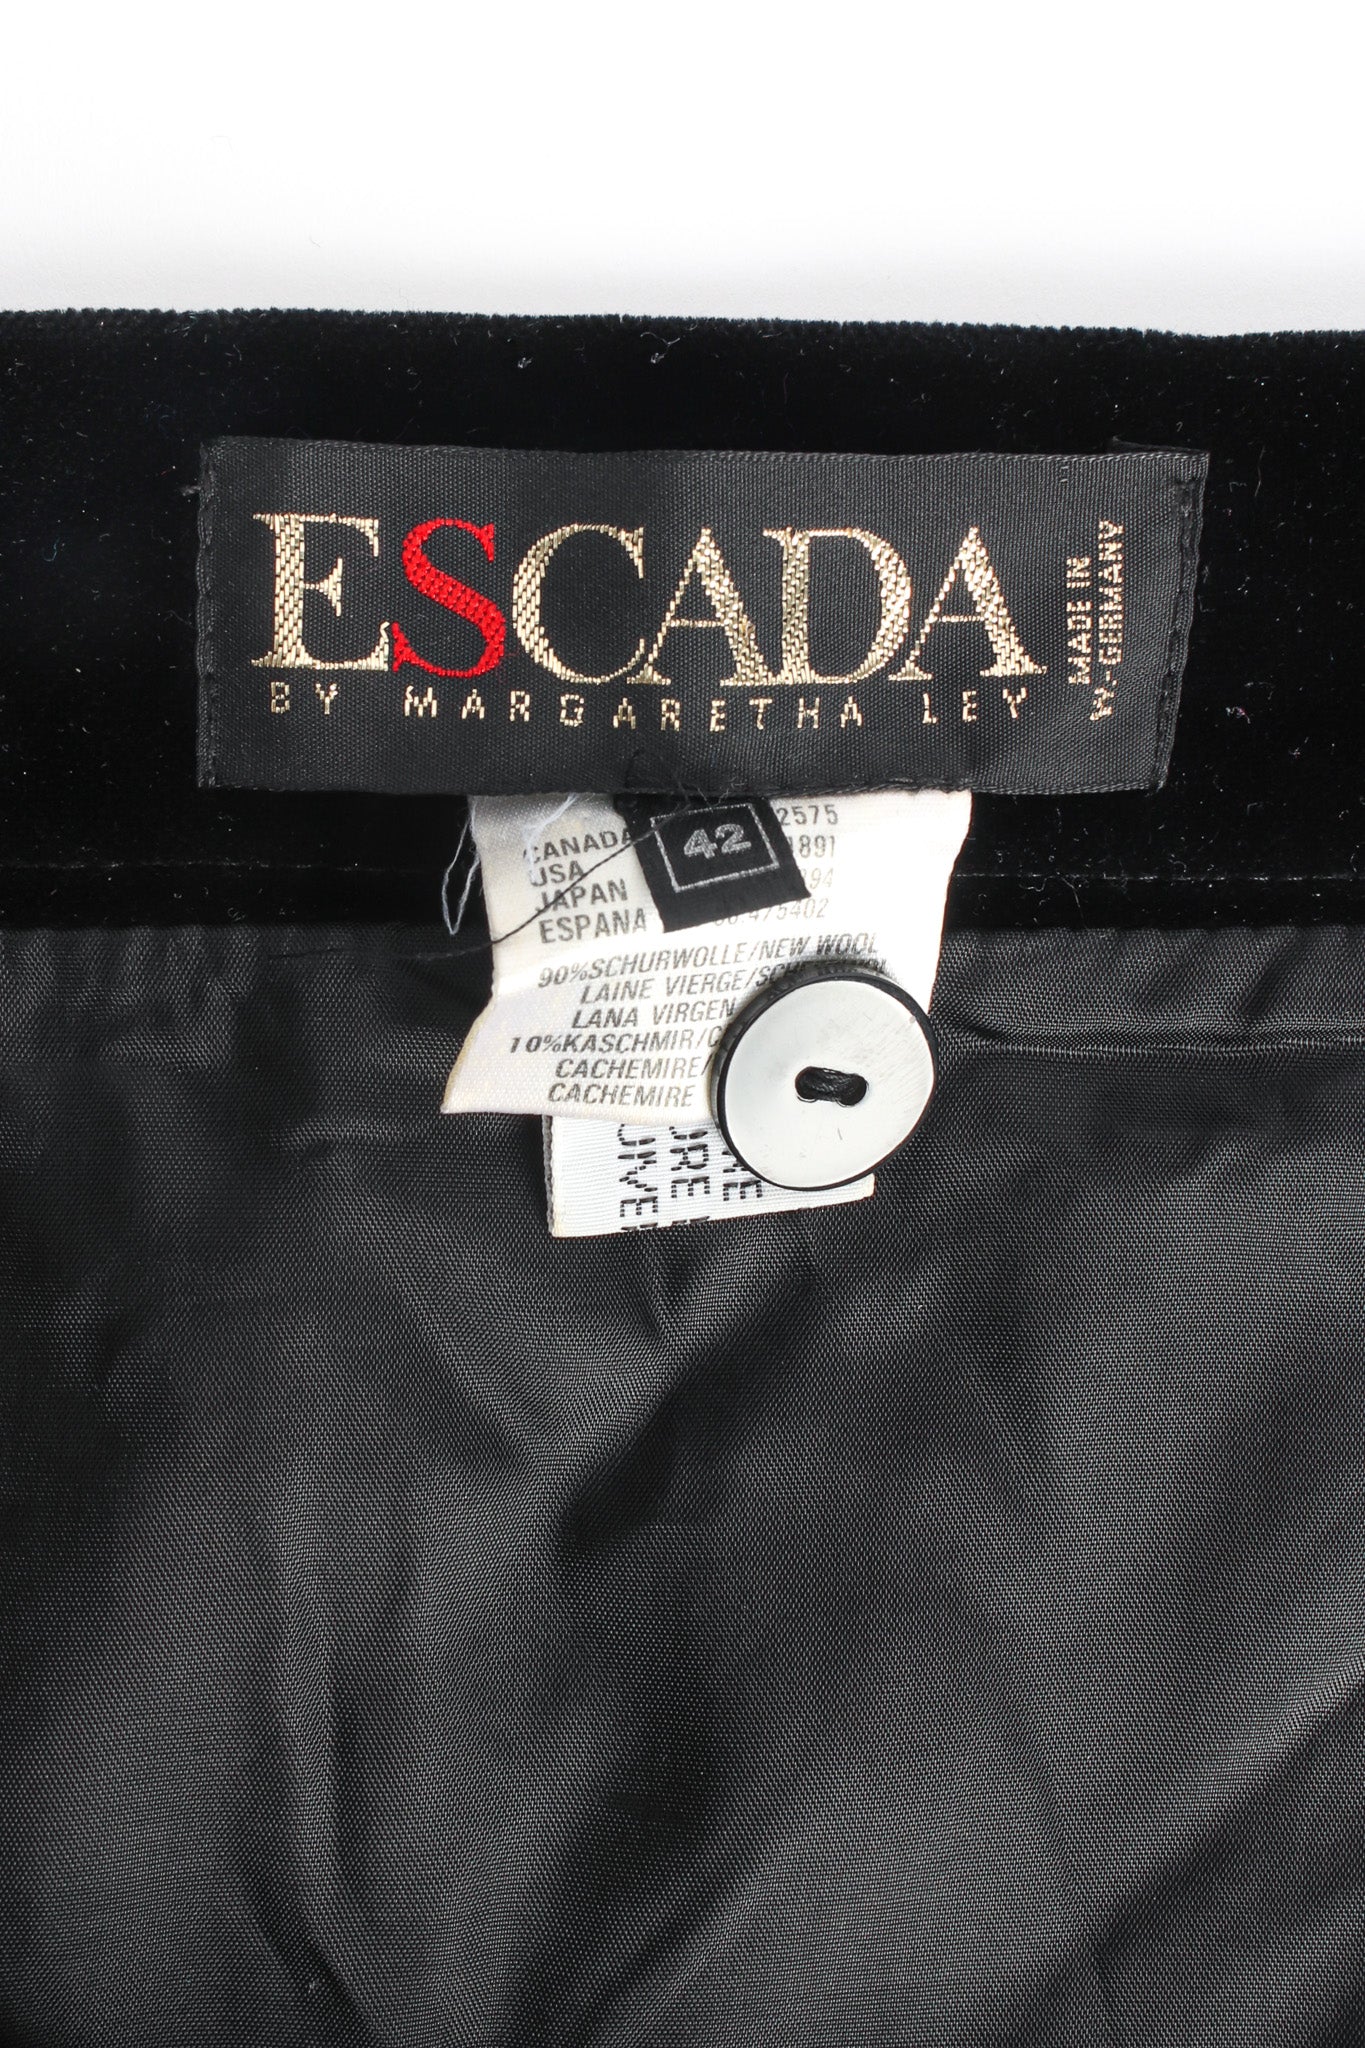 Vintage Escada Margaretha Ley 1980s Plaid Jacket & Skirt Set skirt tag @ Recess LA